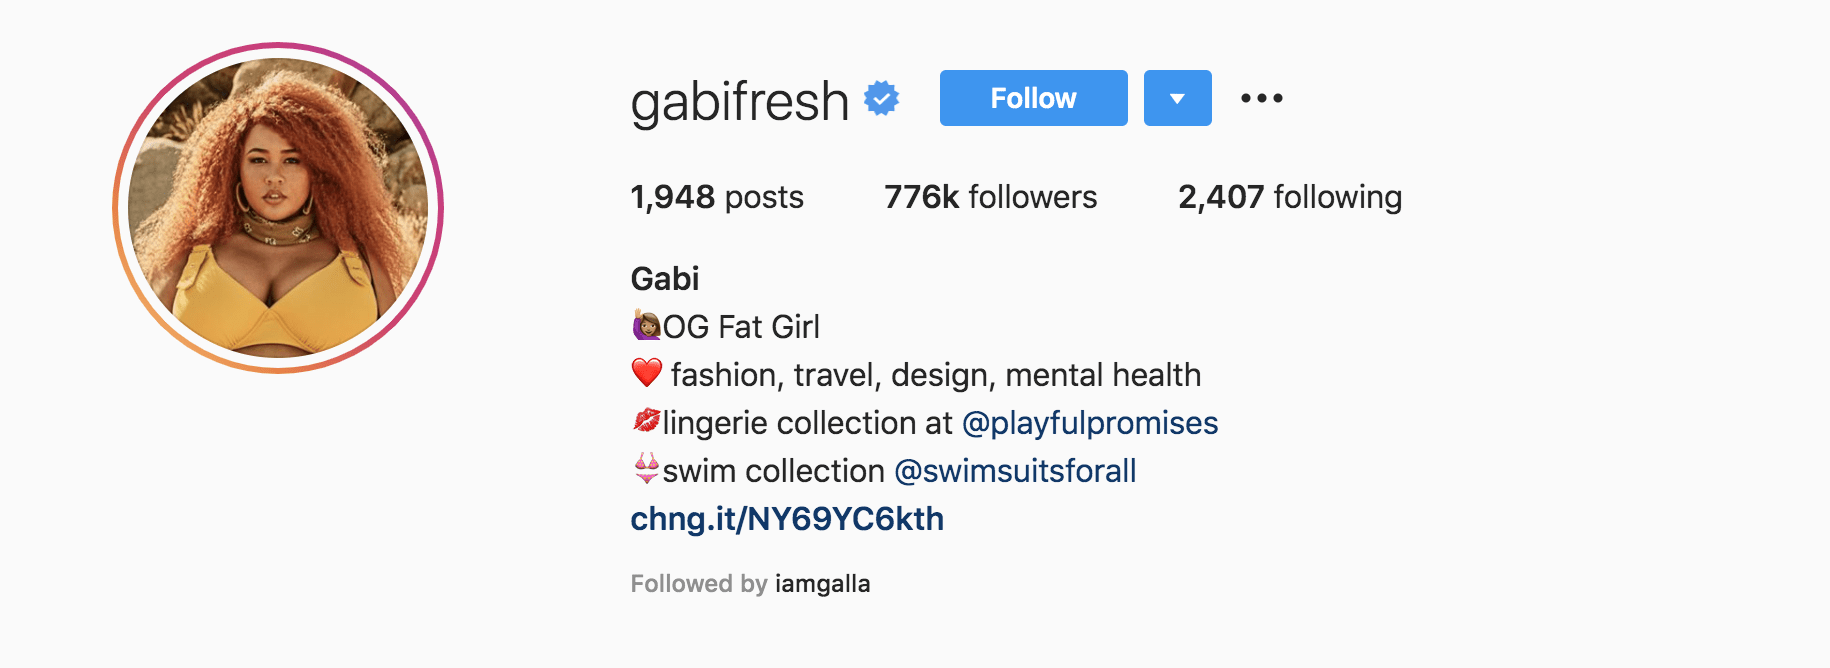 Top Fashion Influencers - Gabi Fresh